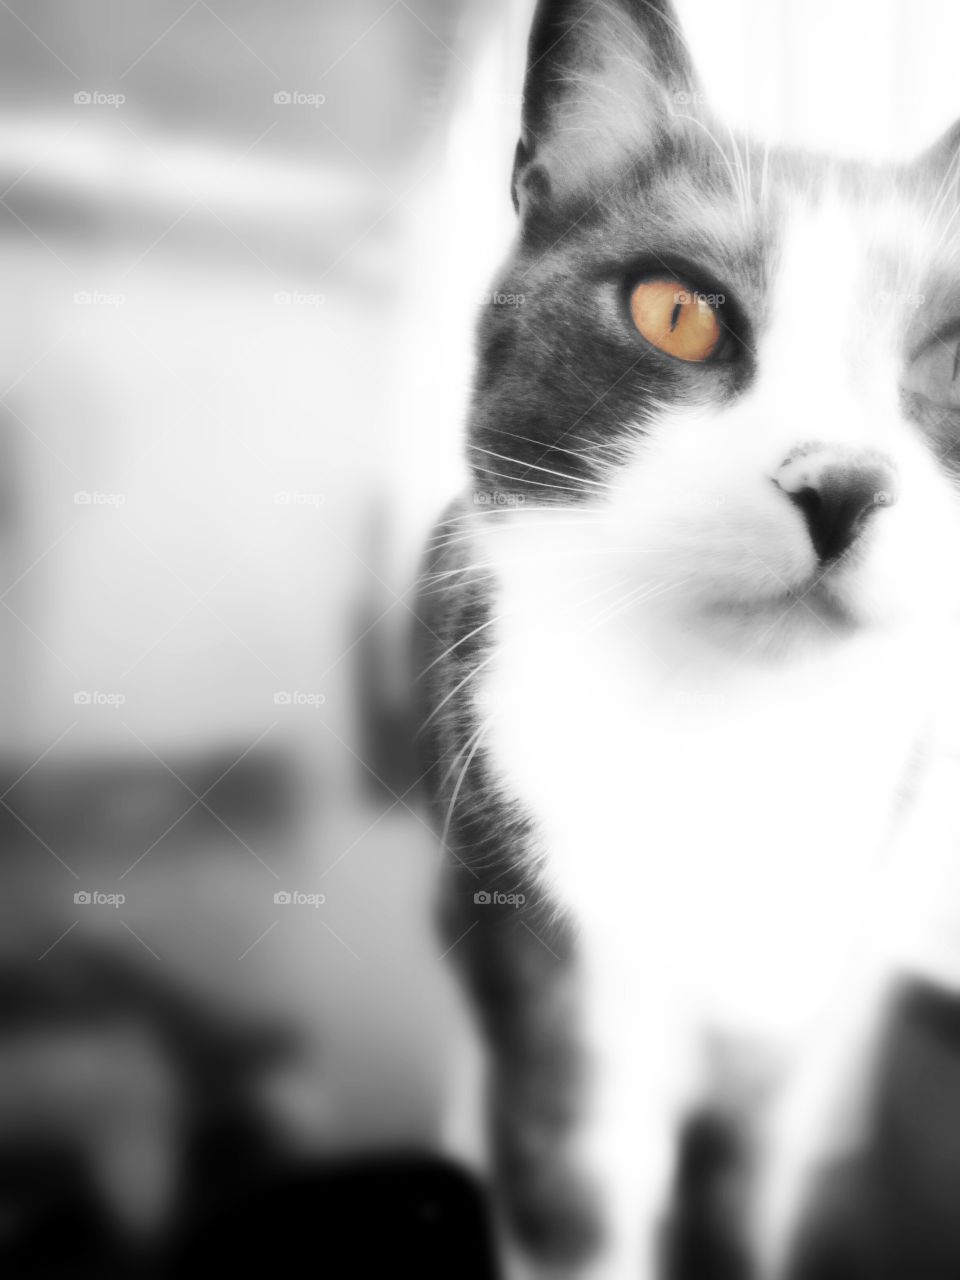 Grey cat yellow eye